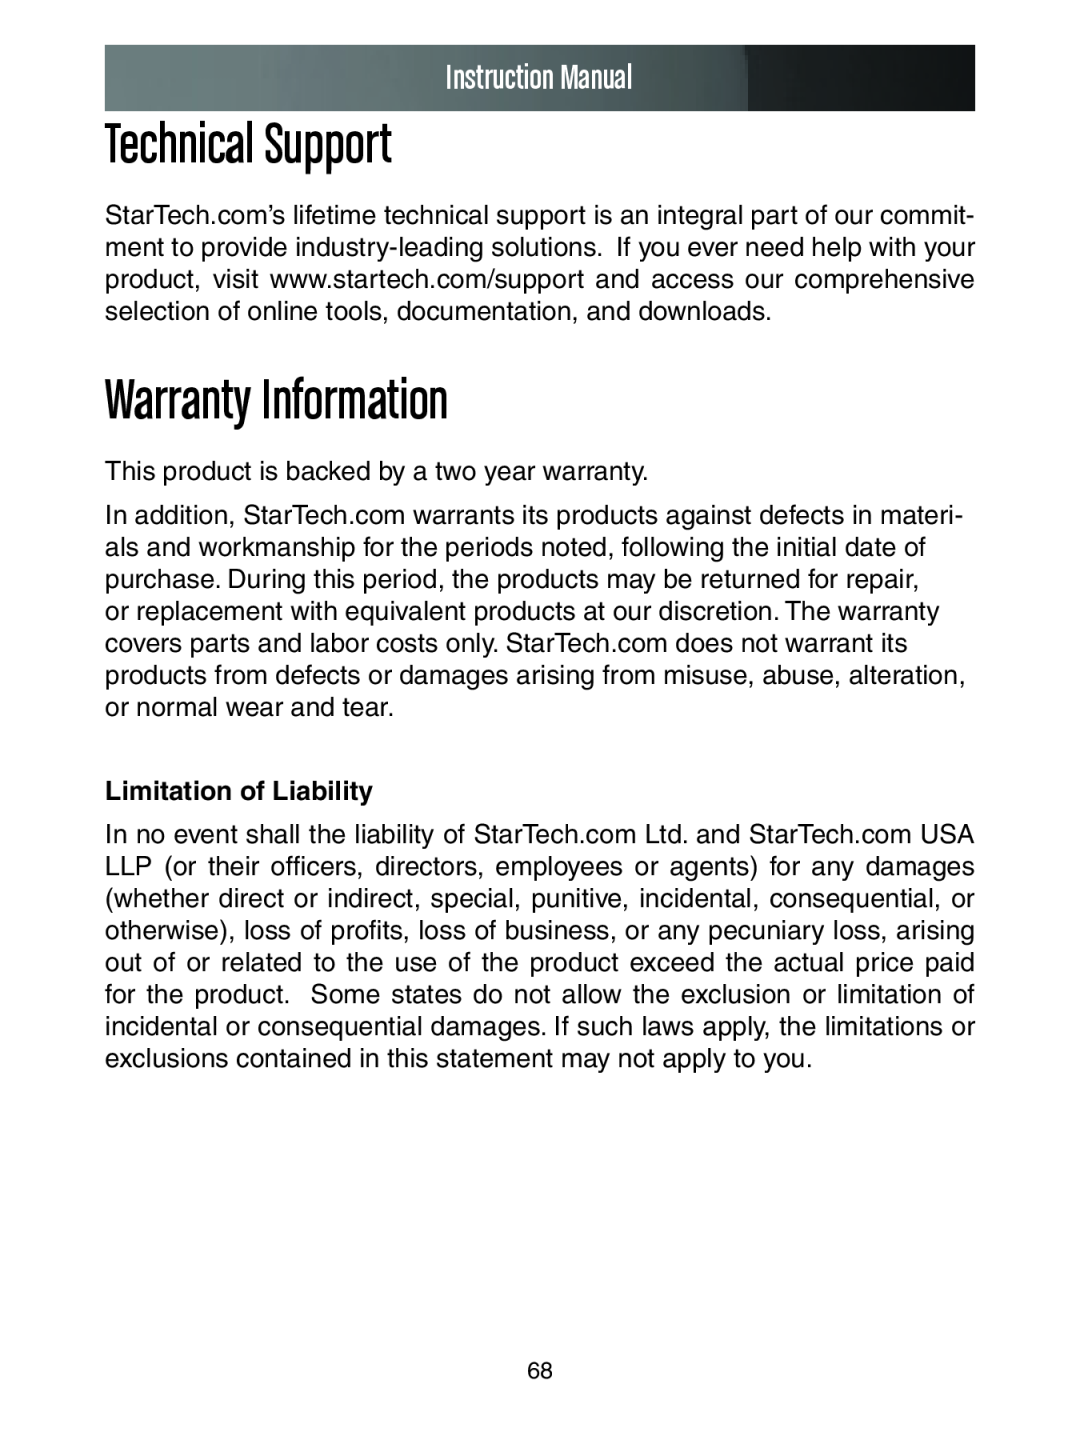 StarTech.com SV3253DXI, SV1653DXI Technical Support, Warranty Information, Limitation of Liability, Instruction Manual 